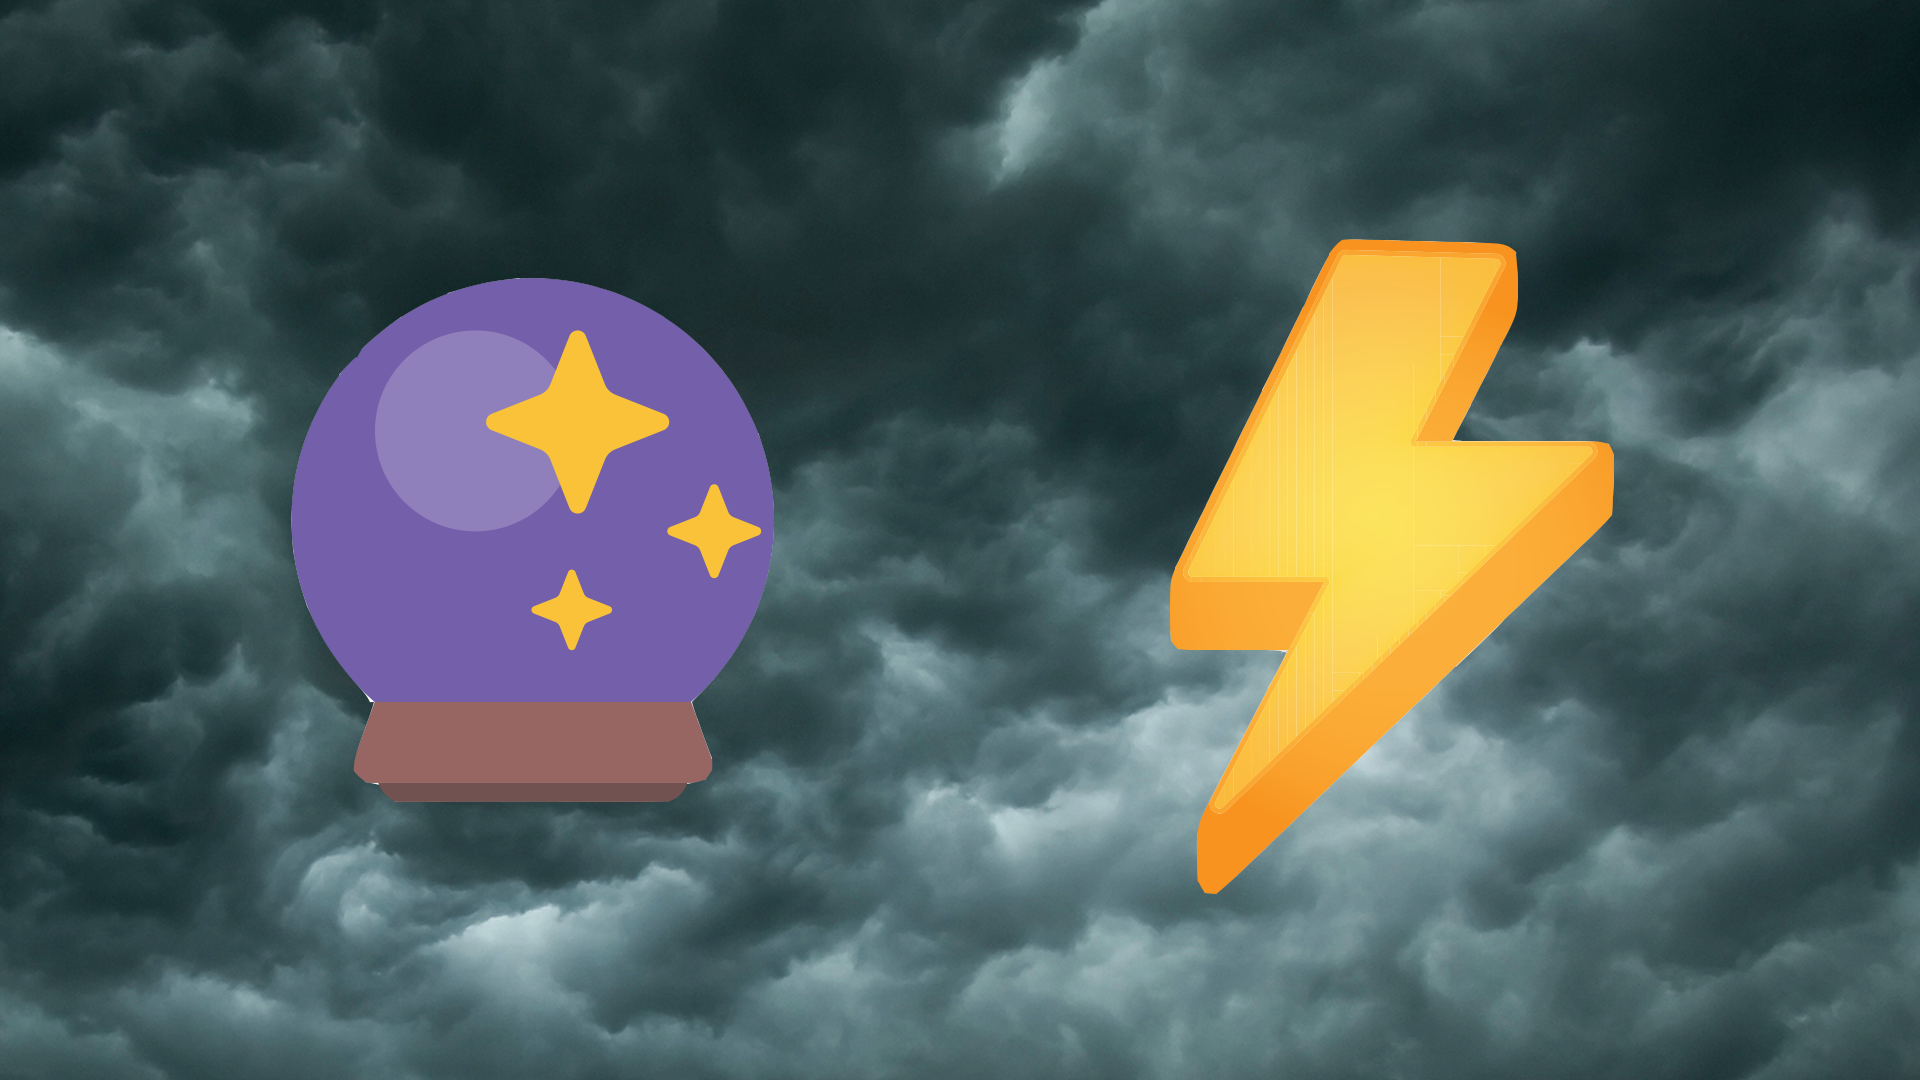 A crystal ball and bolt of lightning emoji